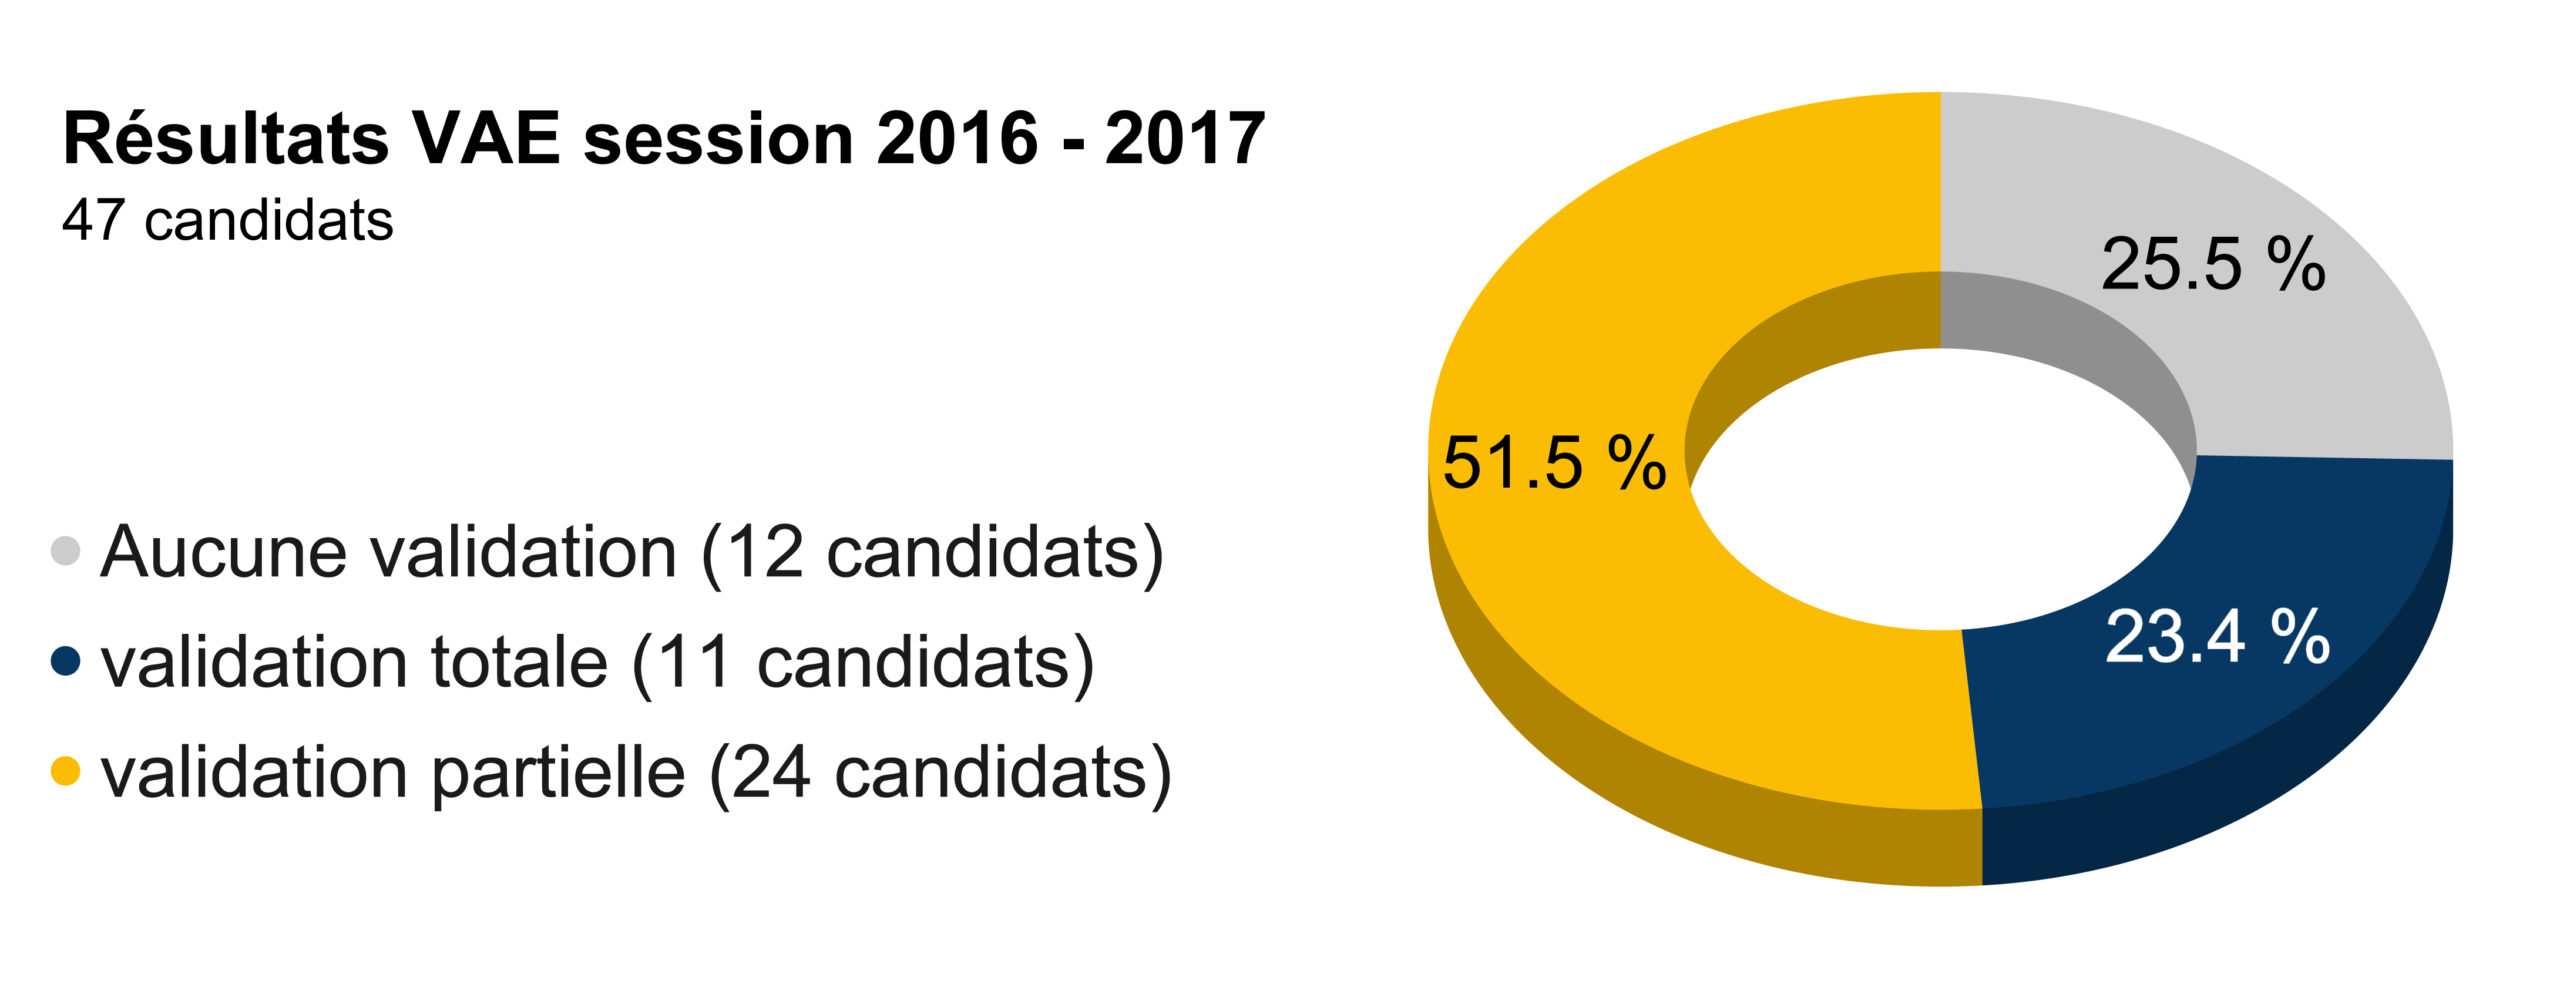 Resultats VAE session 2016 2017 scaled